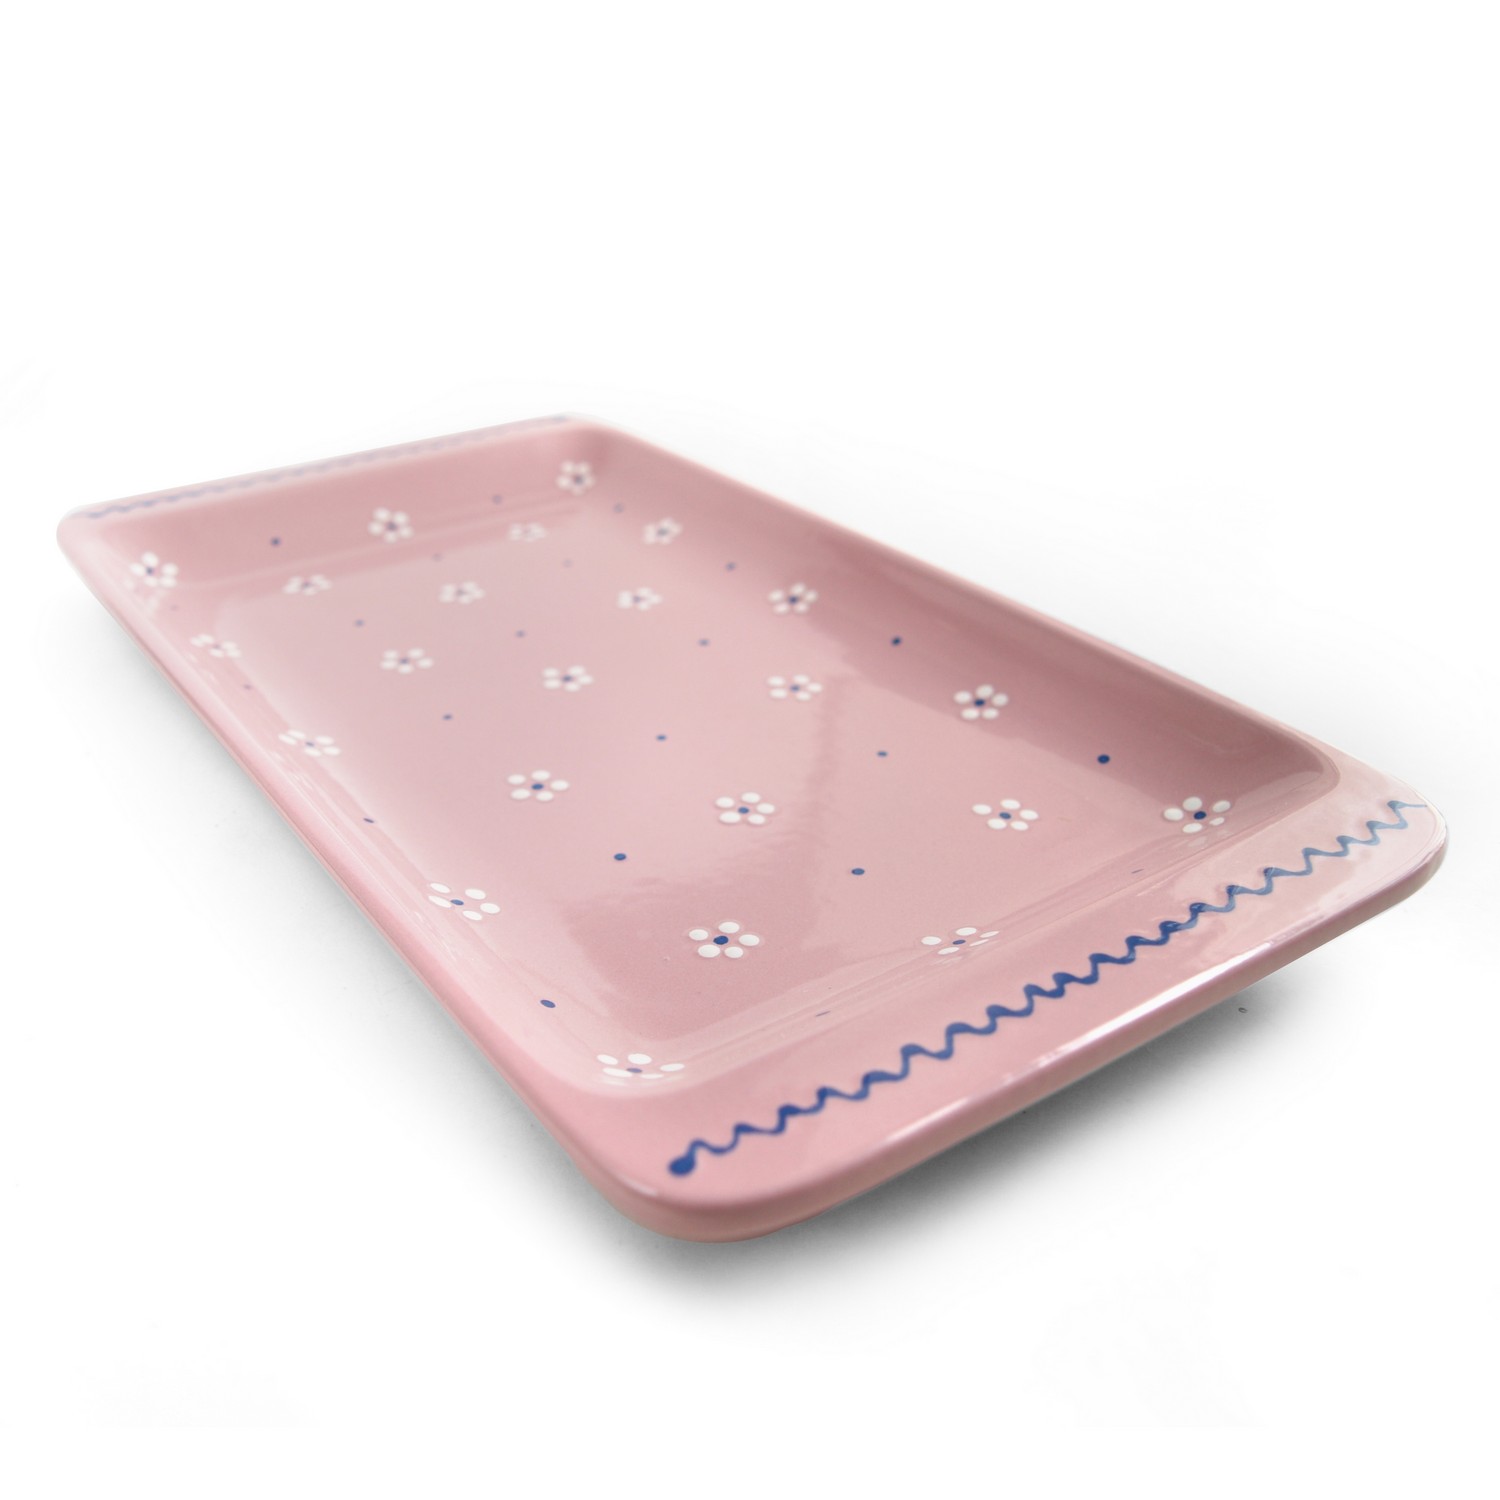 gmundner 4598 dirndlrosa platte keramik rosa kuchenplatte